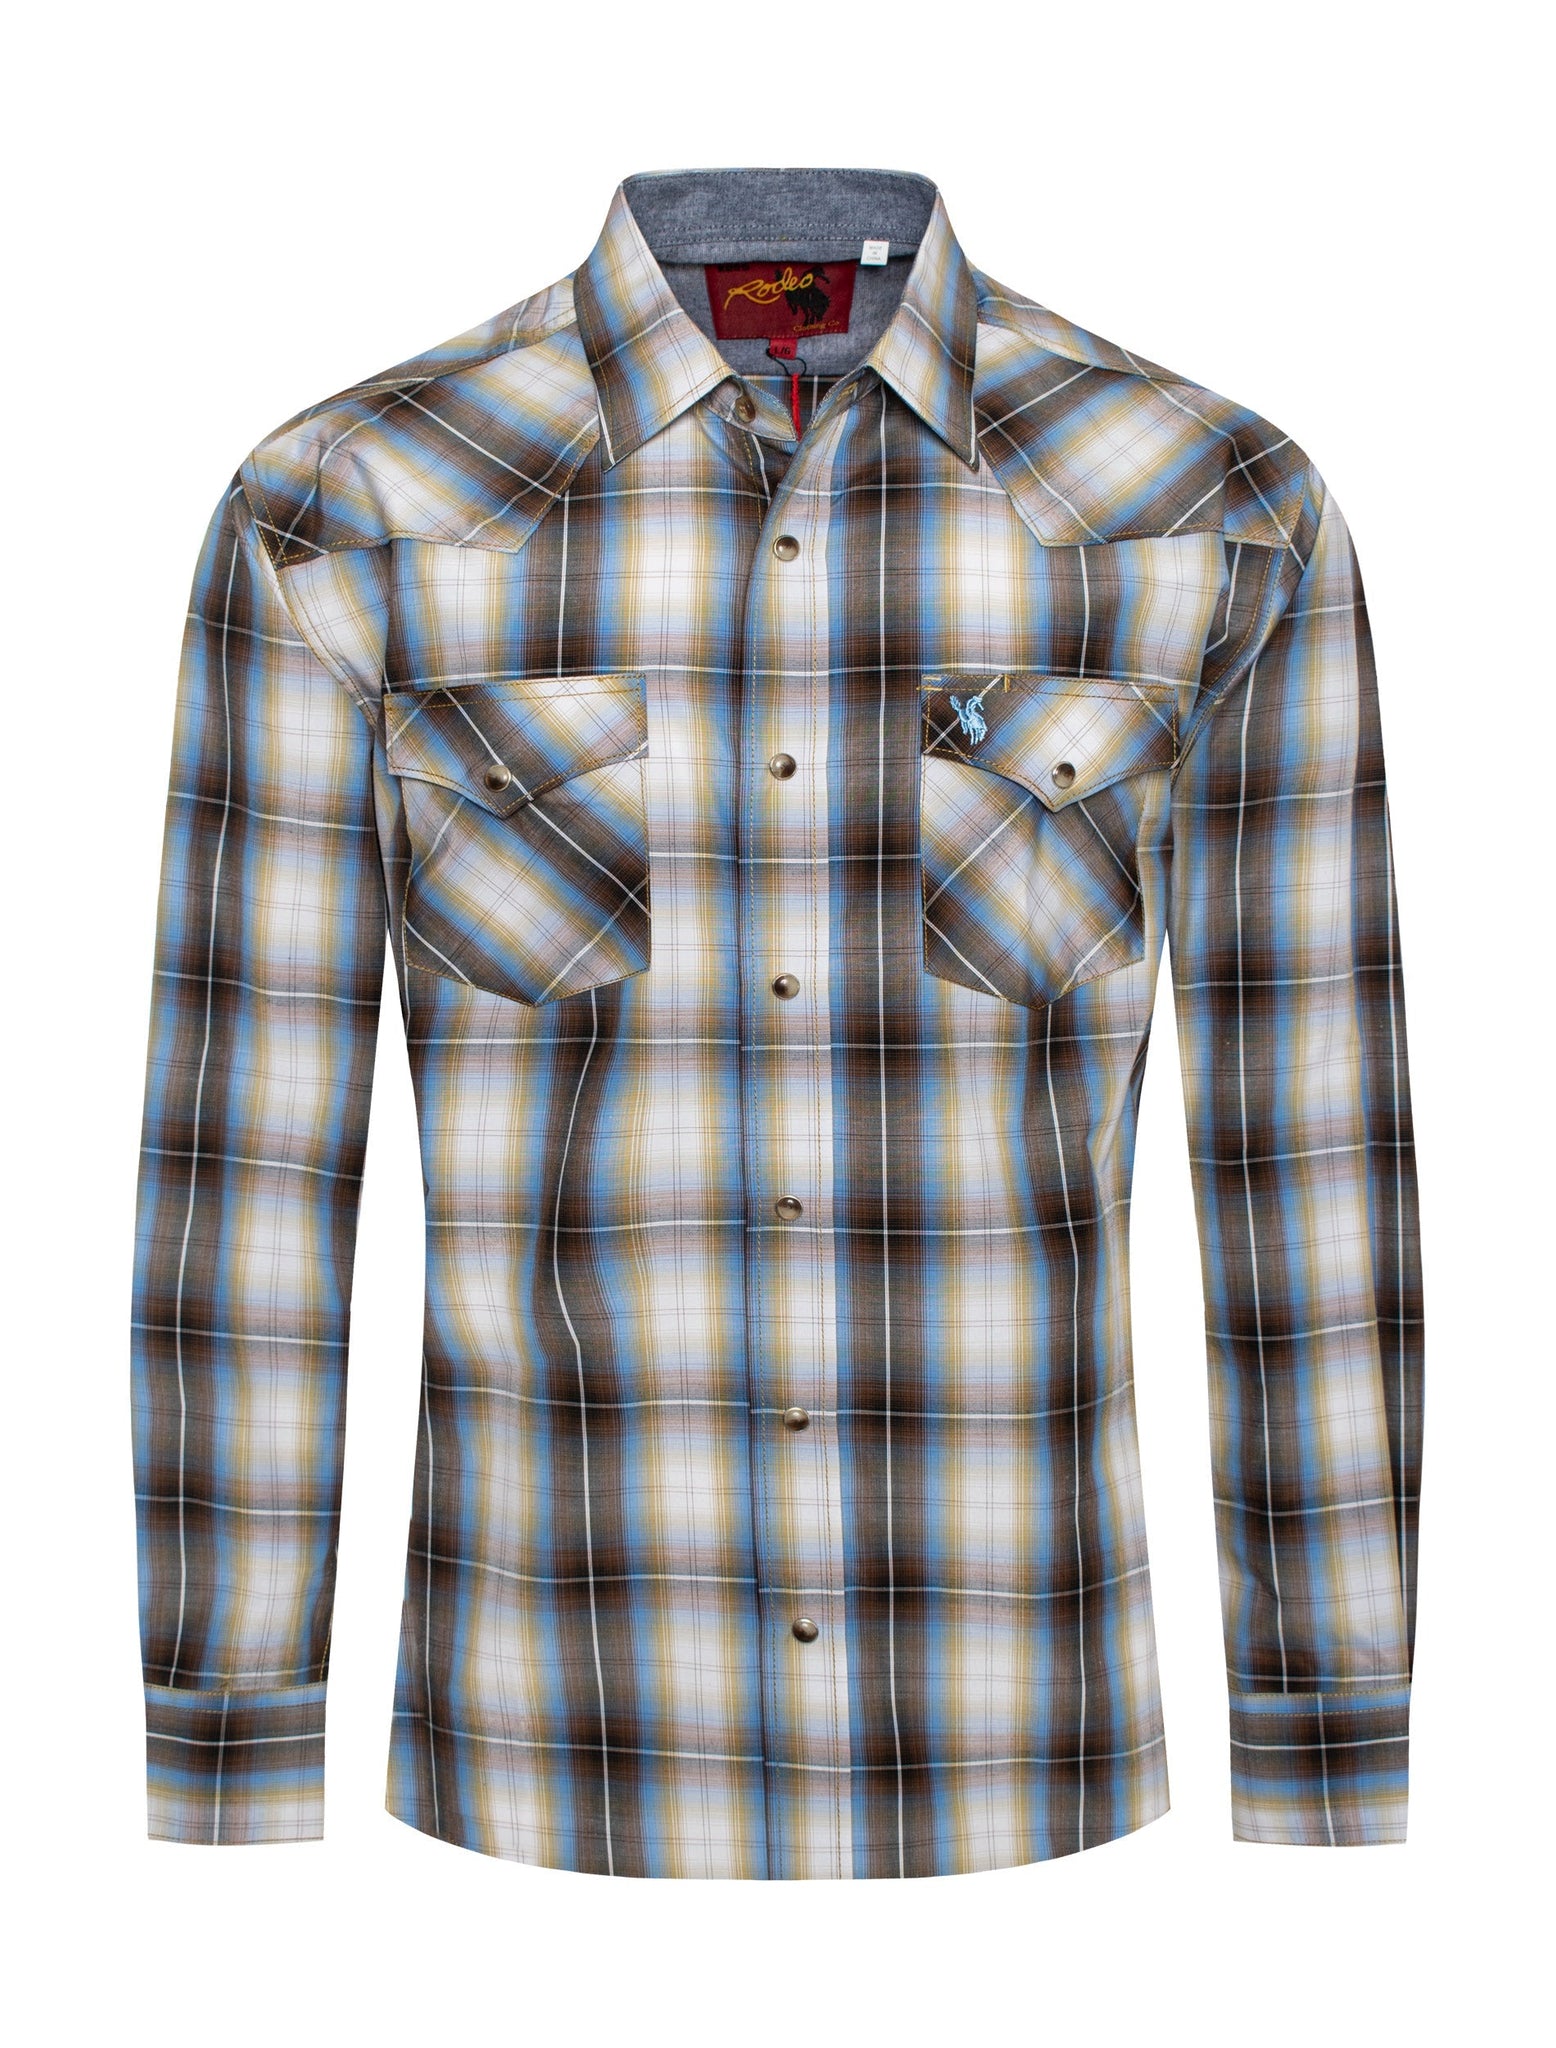 Men's Western Long Sleeve Pearl Snap Plaid Shirt -PS400-492